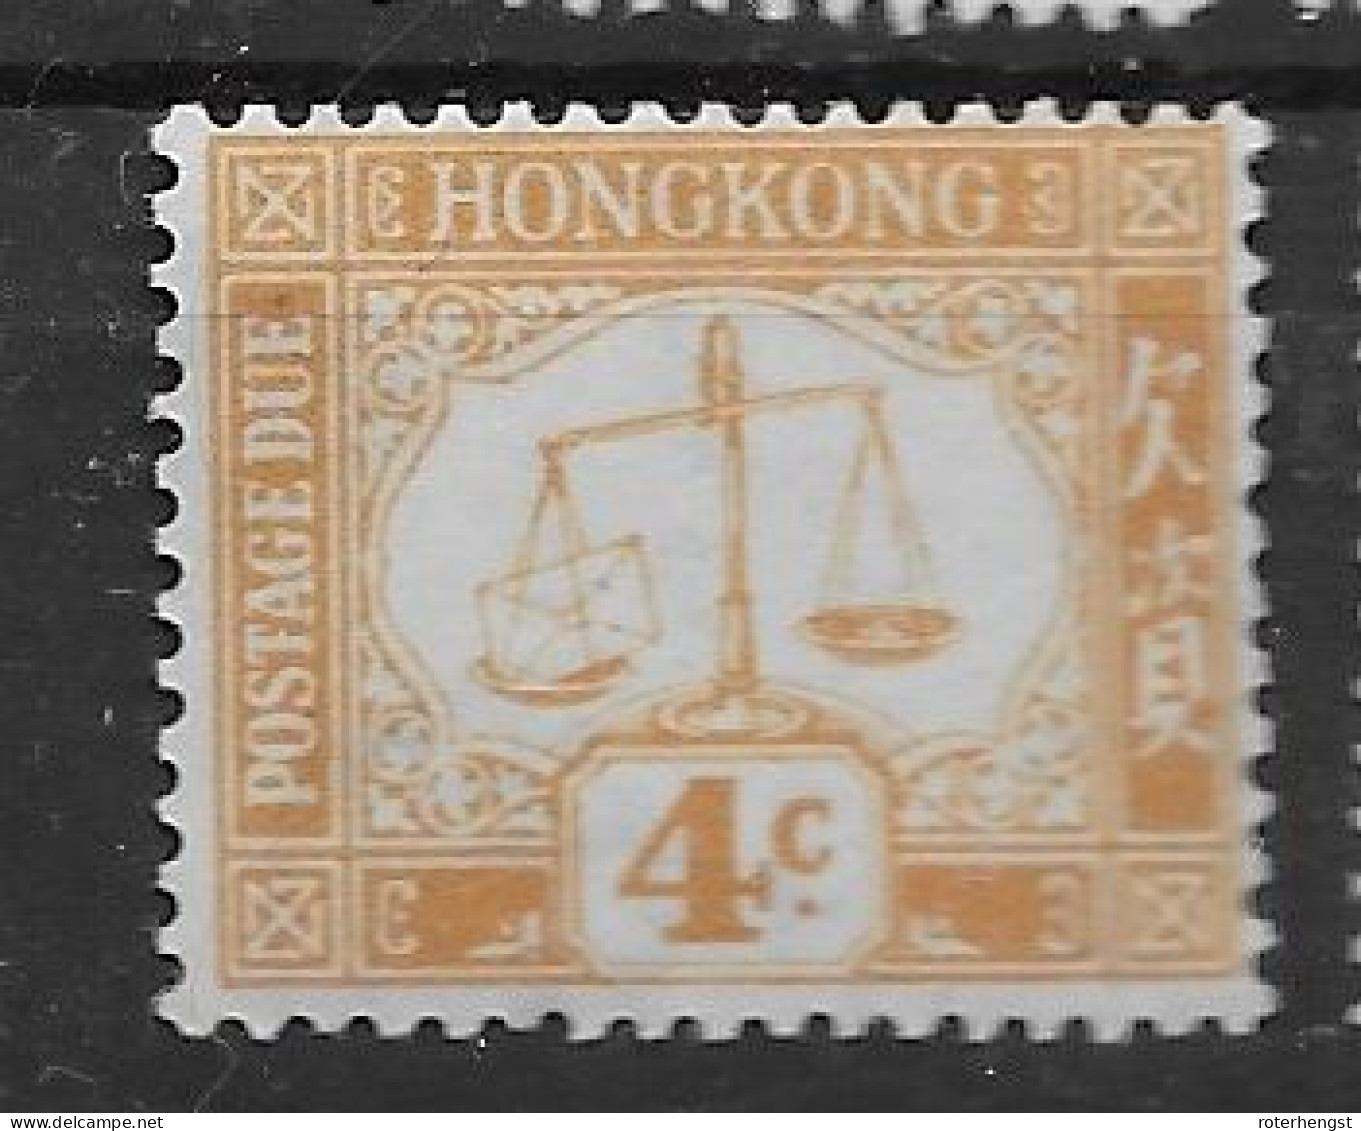 Hong Kong Mint Low Hinge Trace 1938 Normal Paper 25 Euros - Strafport